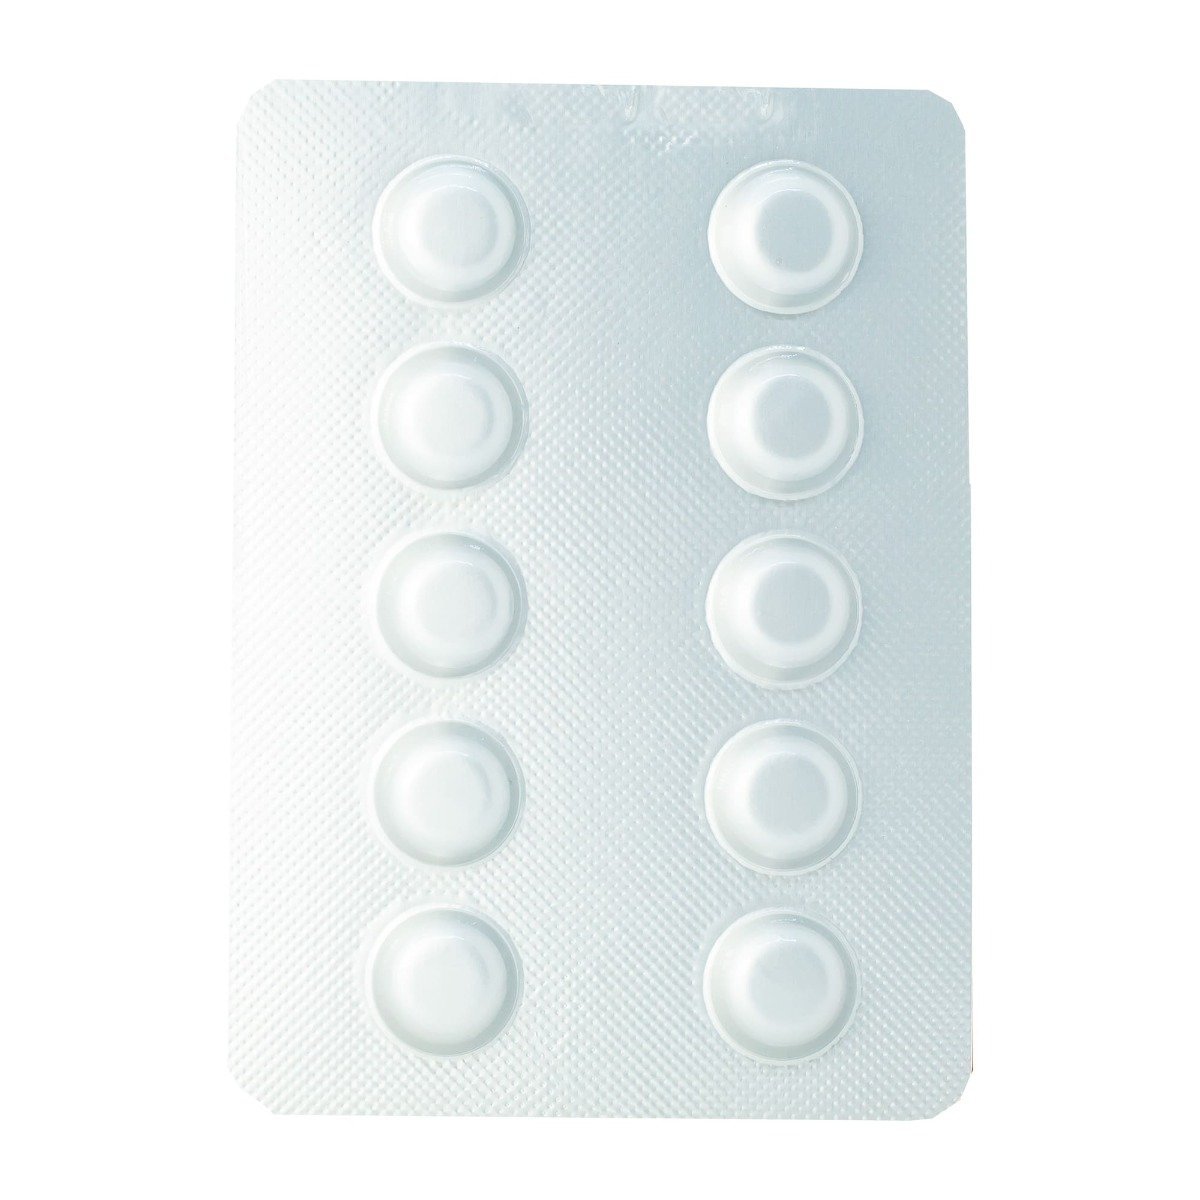 Dilatrol 6.25 mg - 30 Tablets - Bloom Pharmacy